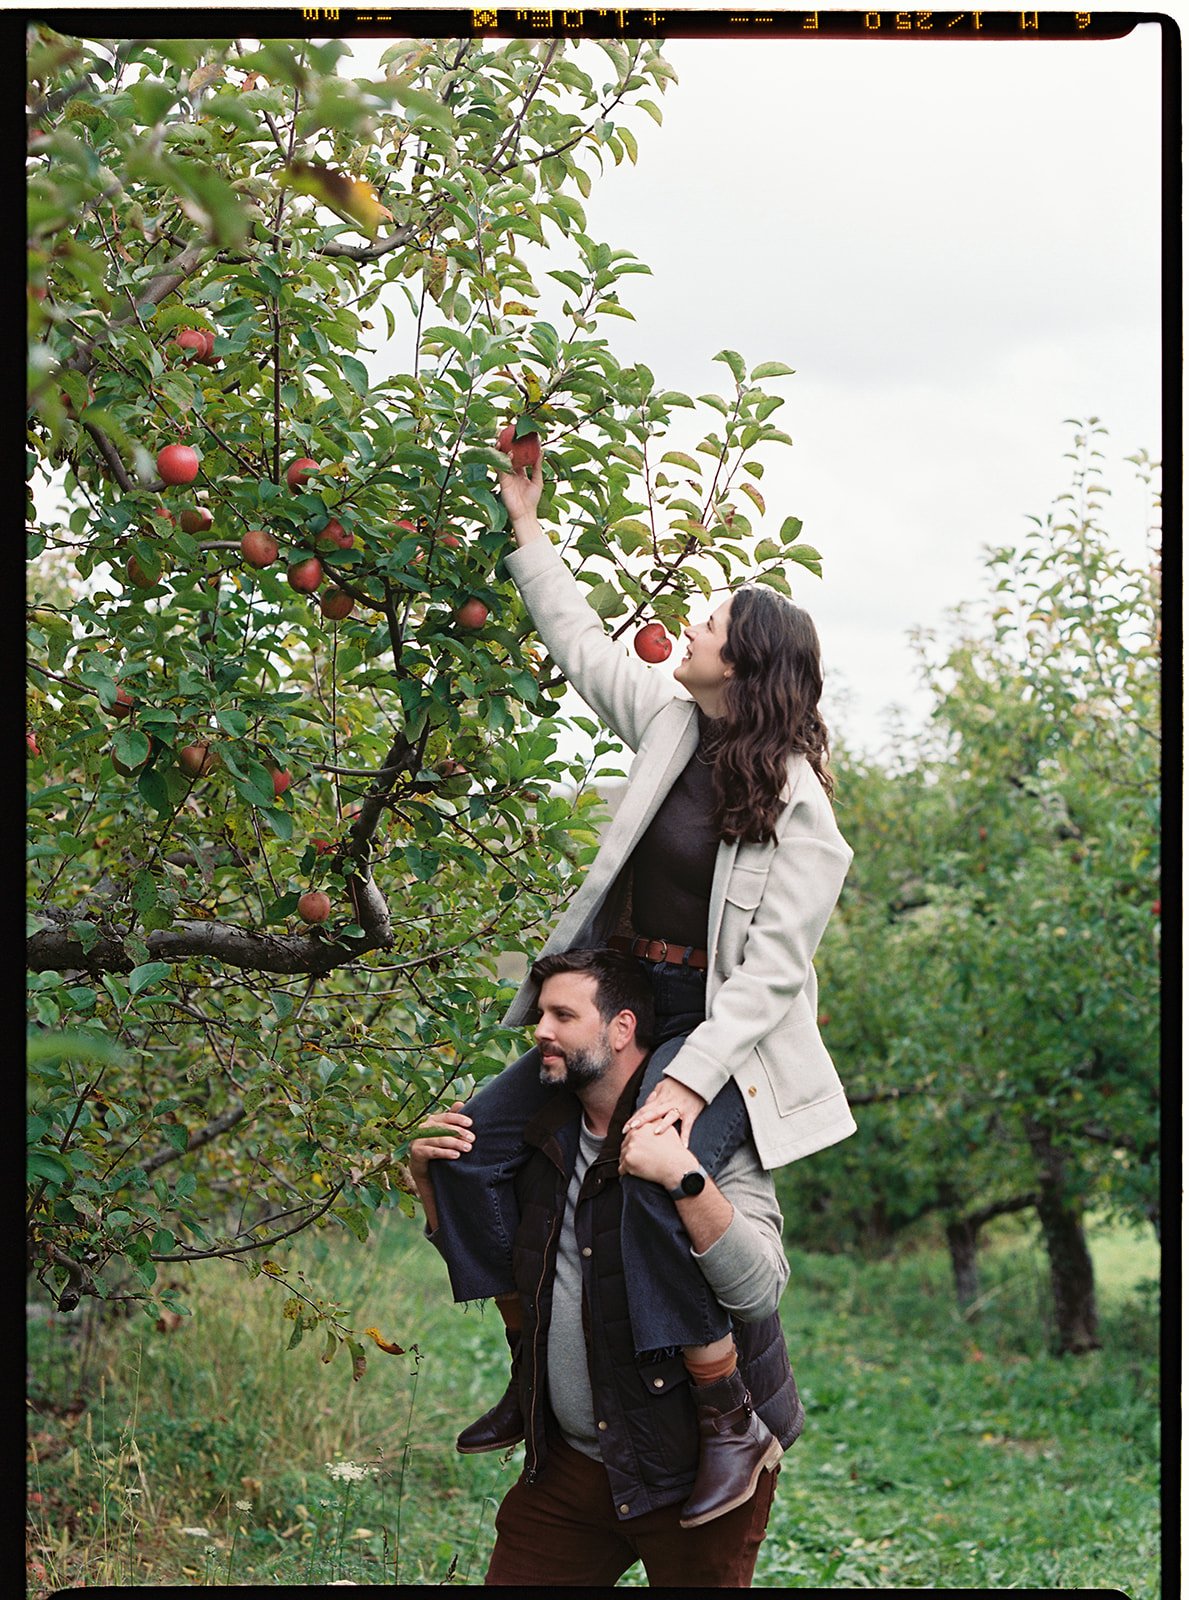 An Apple Picking Wedding Welcome Party - Destination Wedding Photographer - Film  (21).jpg